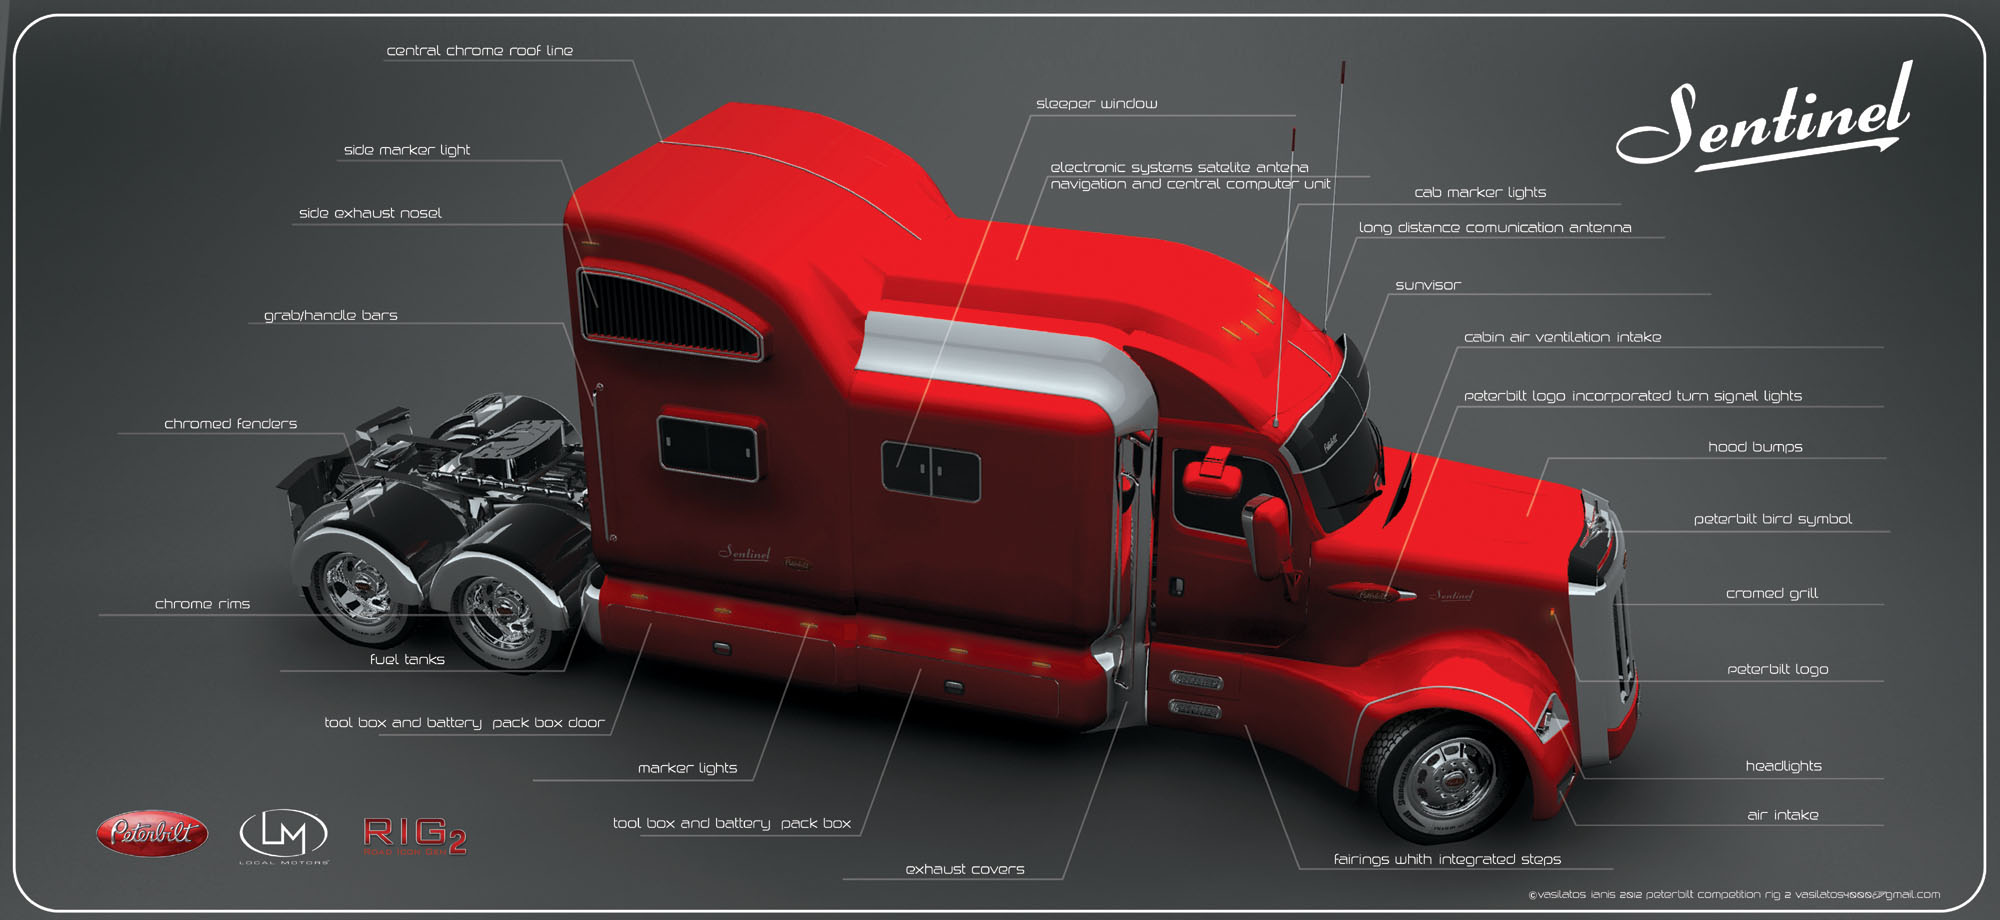 Peterbilt Sentinel Truck Concept Offers Classic and Elegant ...